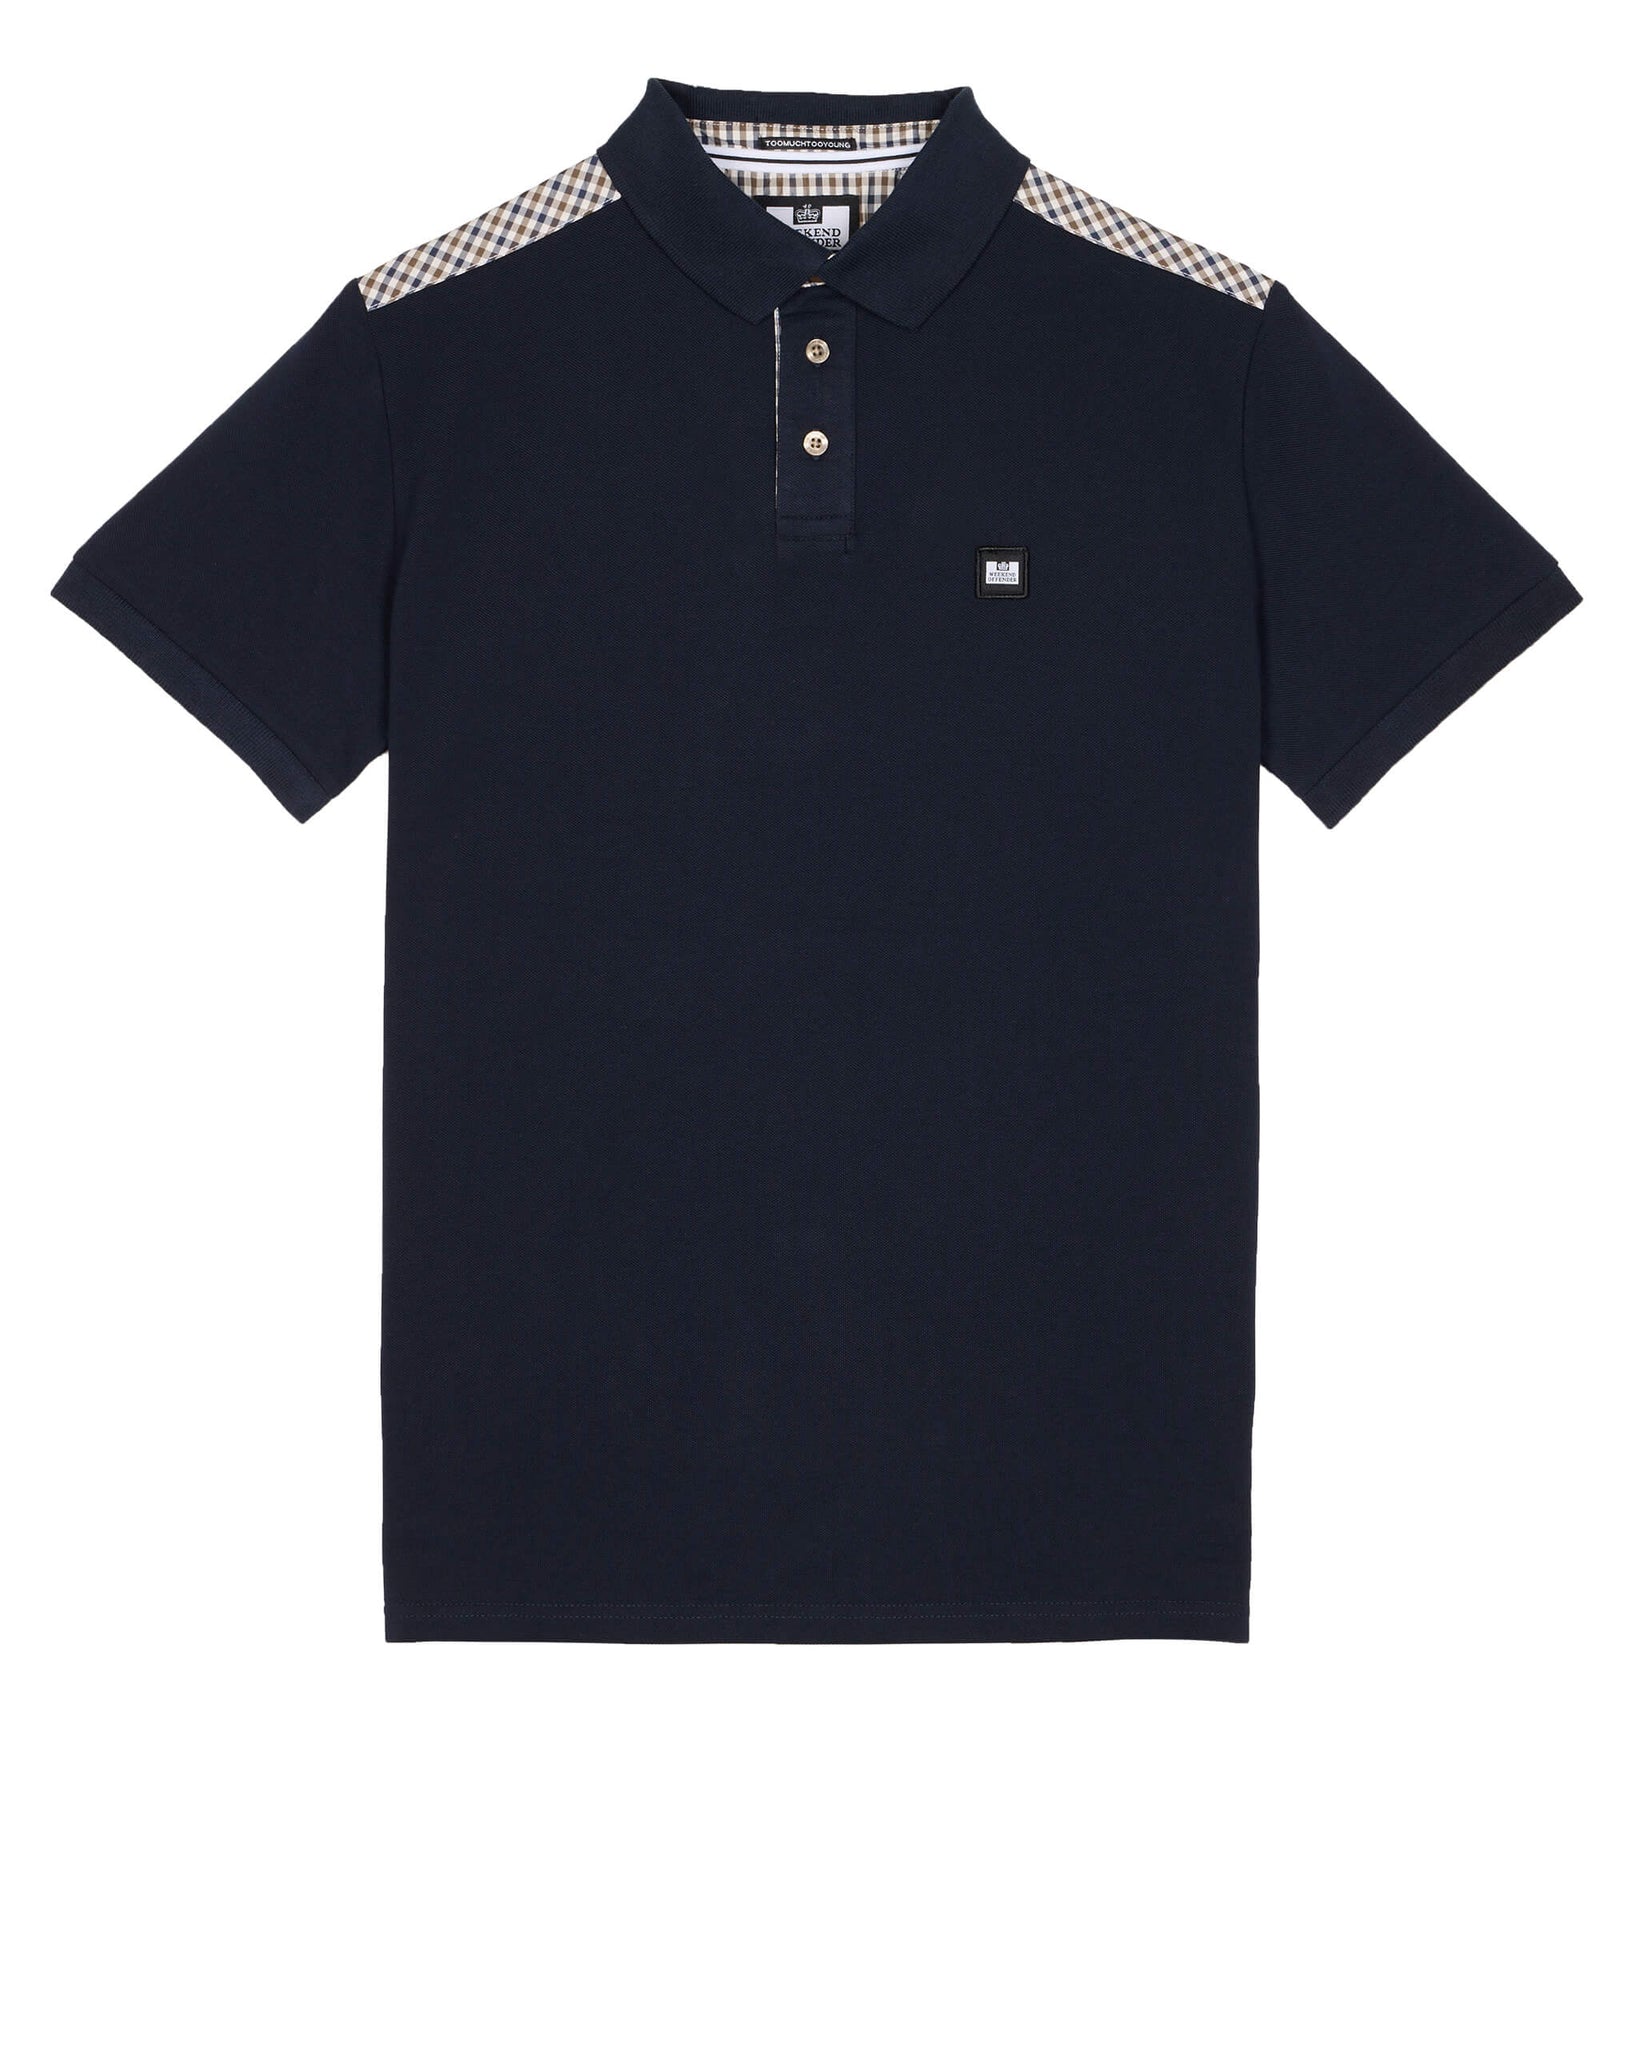 Jacobs Polo Shirt Navy